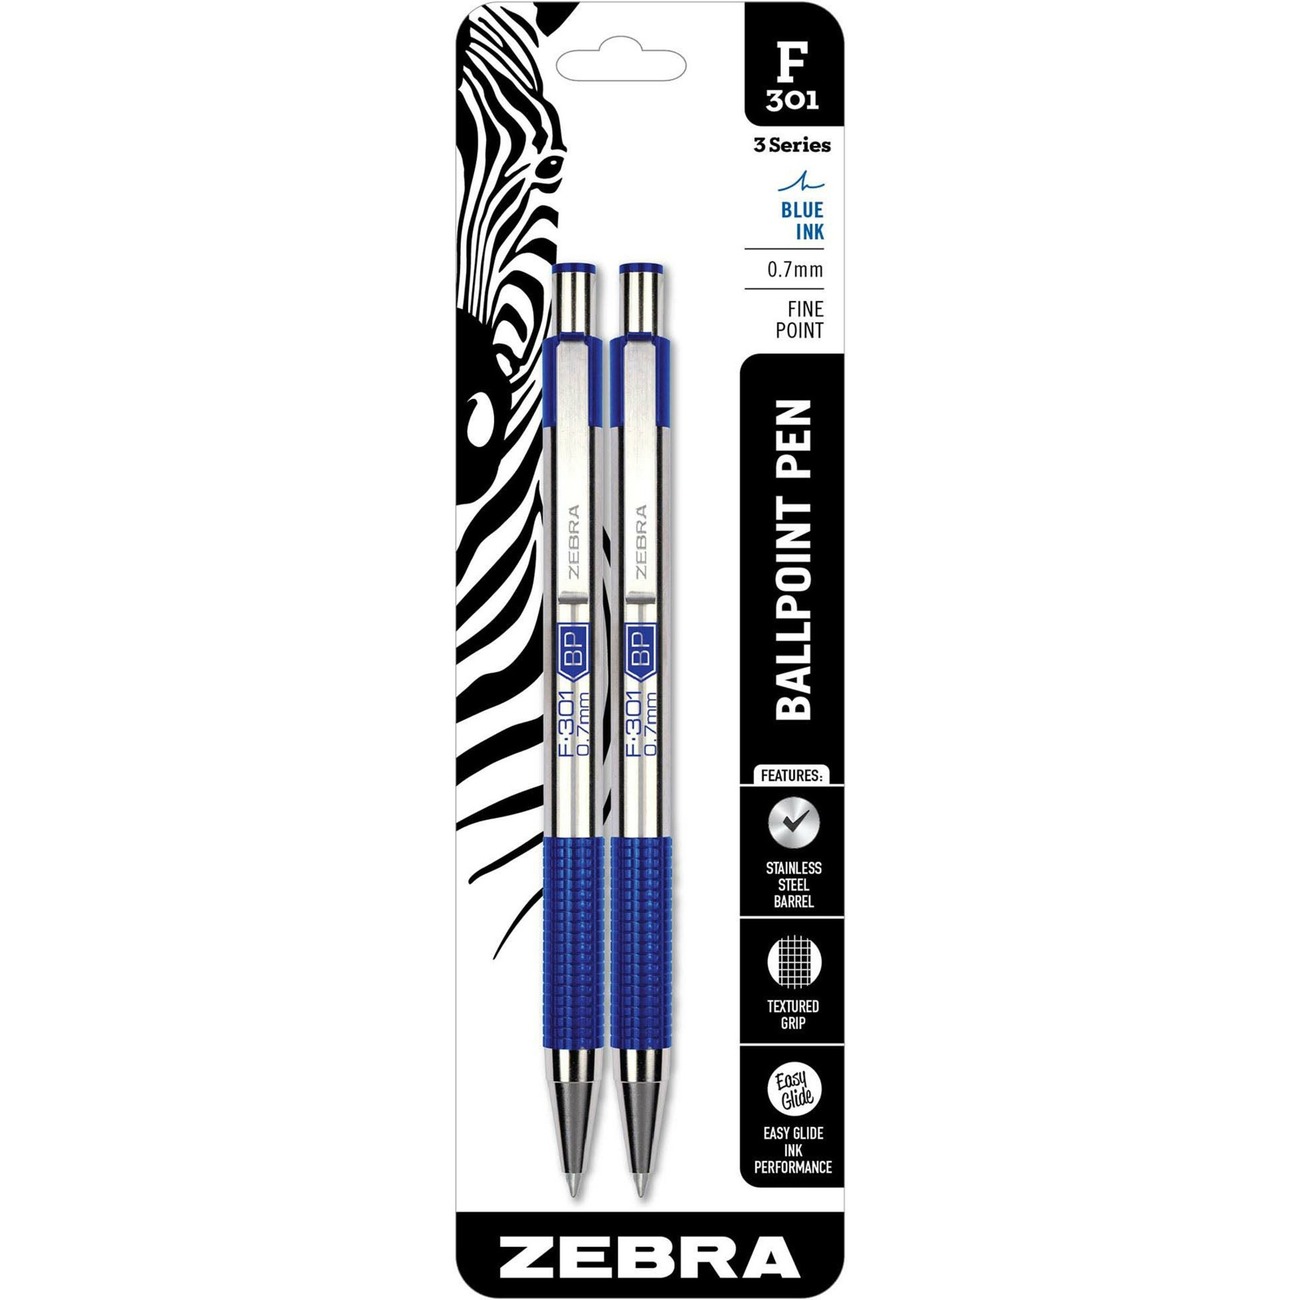 Lelix Felt Tip Pens, 60 Blue Pens, 0.7mm Medium Point Felt Pens